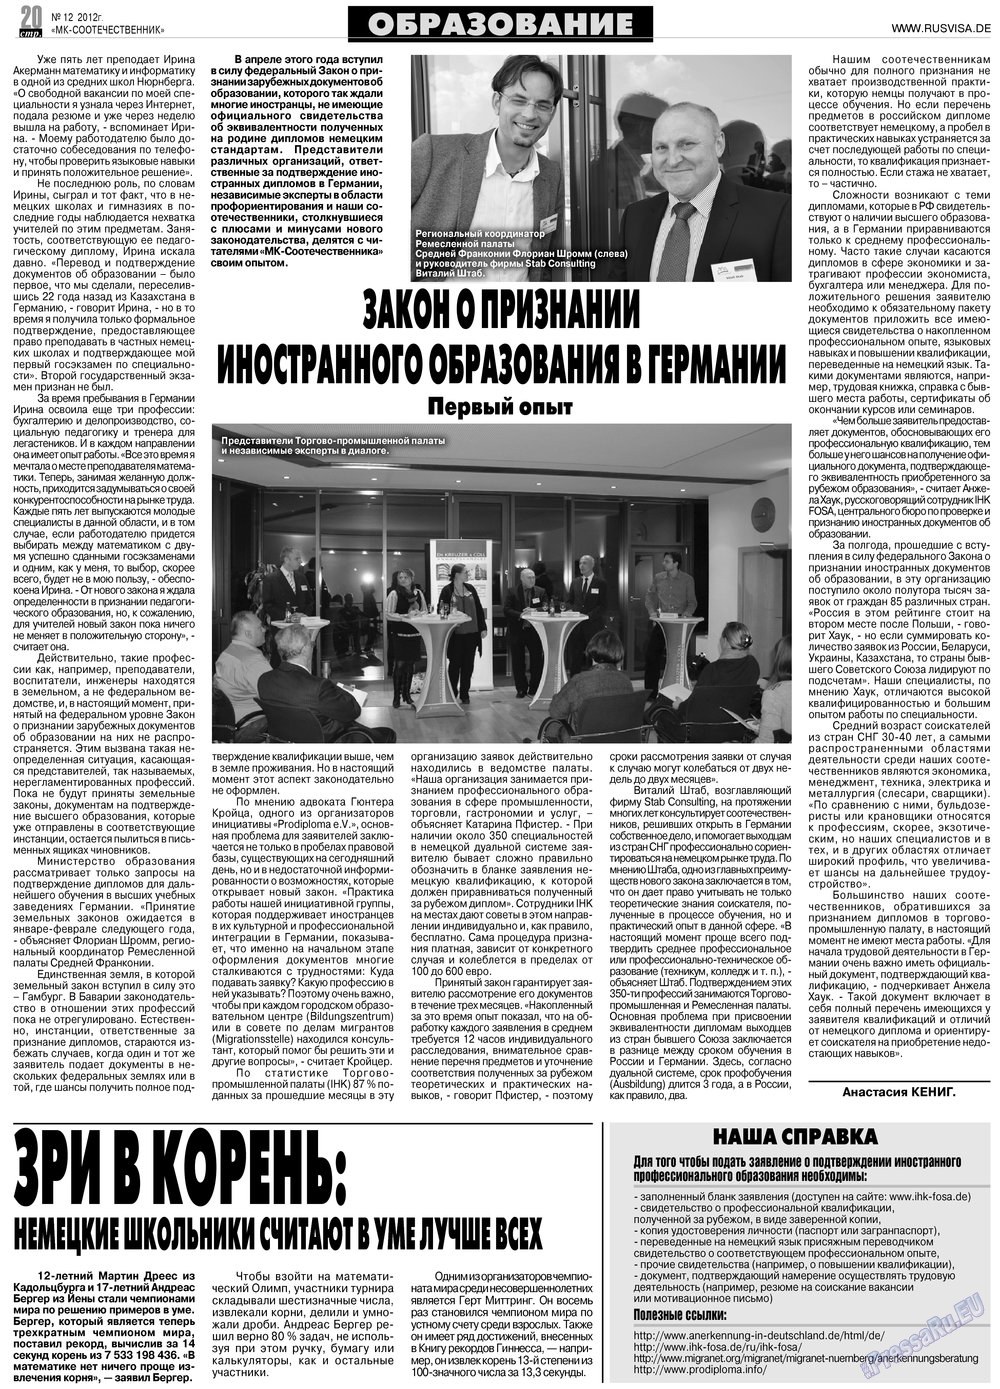 МК-Германия планета мнений, газета. 2012 №12 стр.20